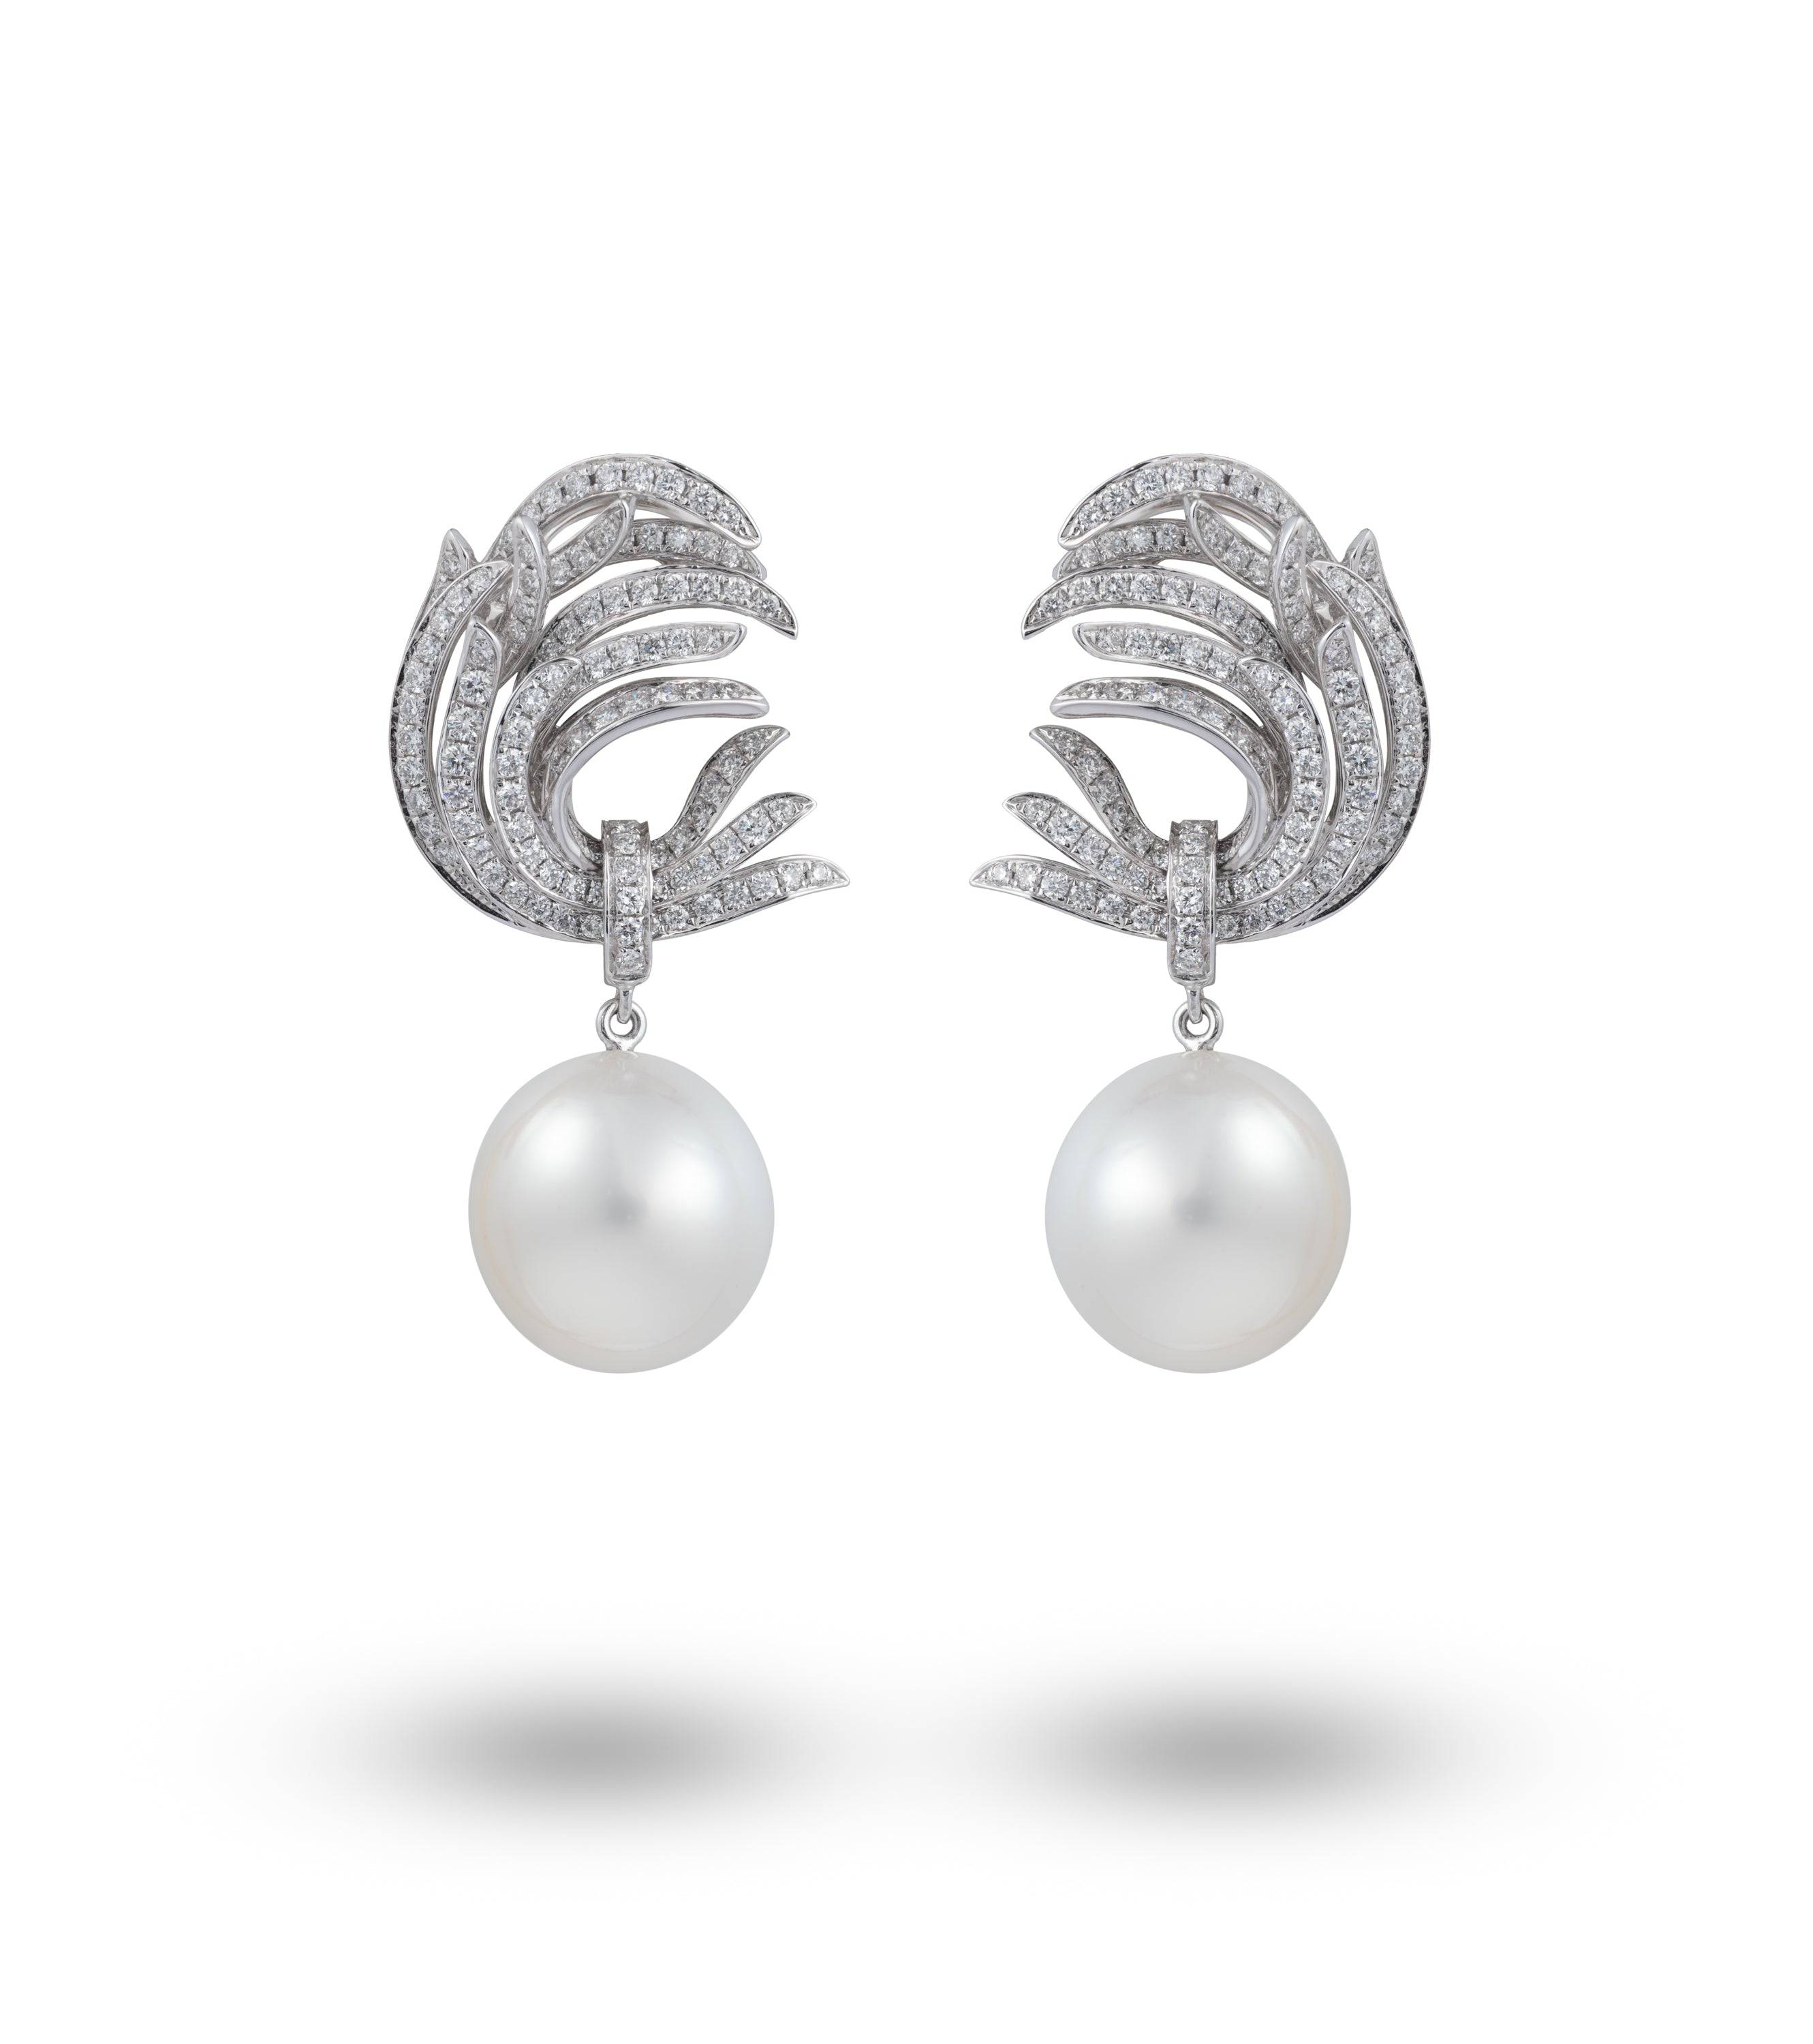 transformational-diamond-south-sea-pearl-earrings-43541473001636.jpg